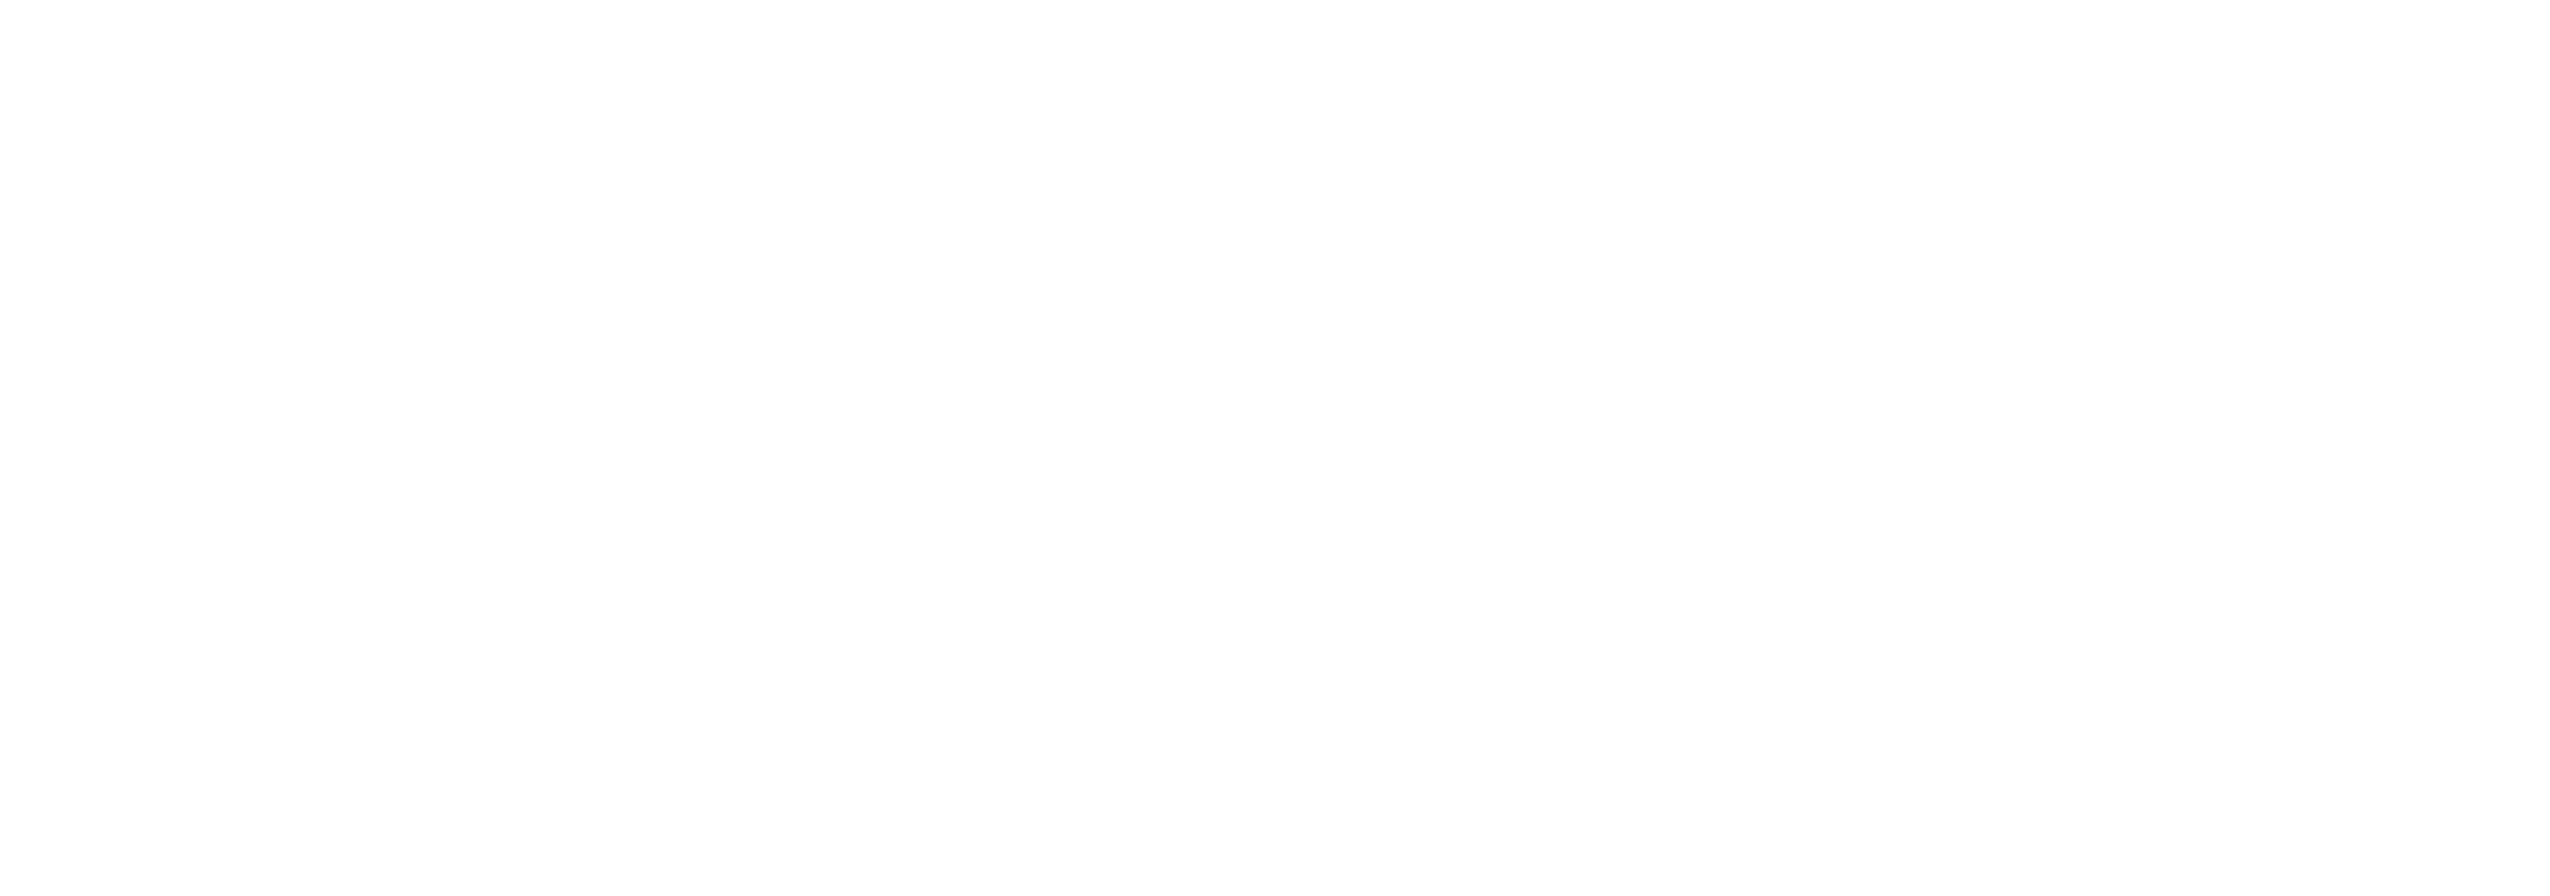 ROSTAMBEK & COMPANY